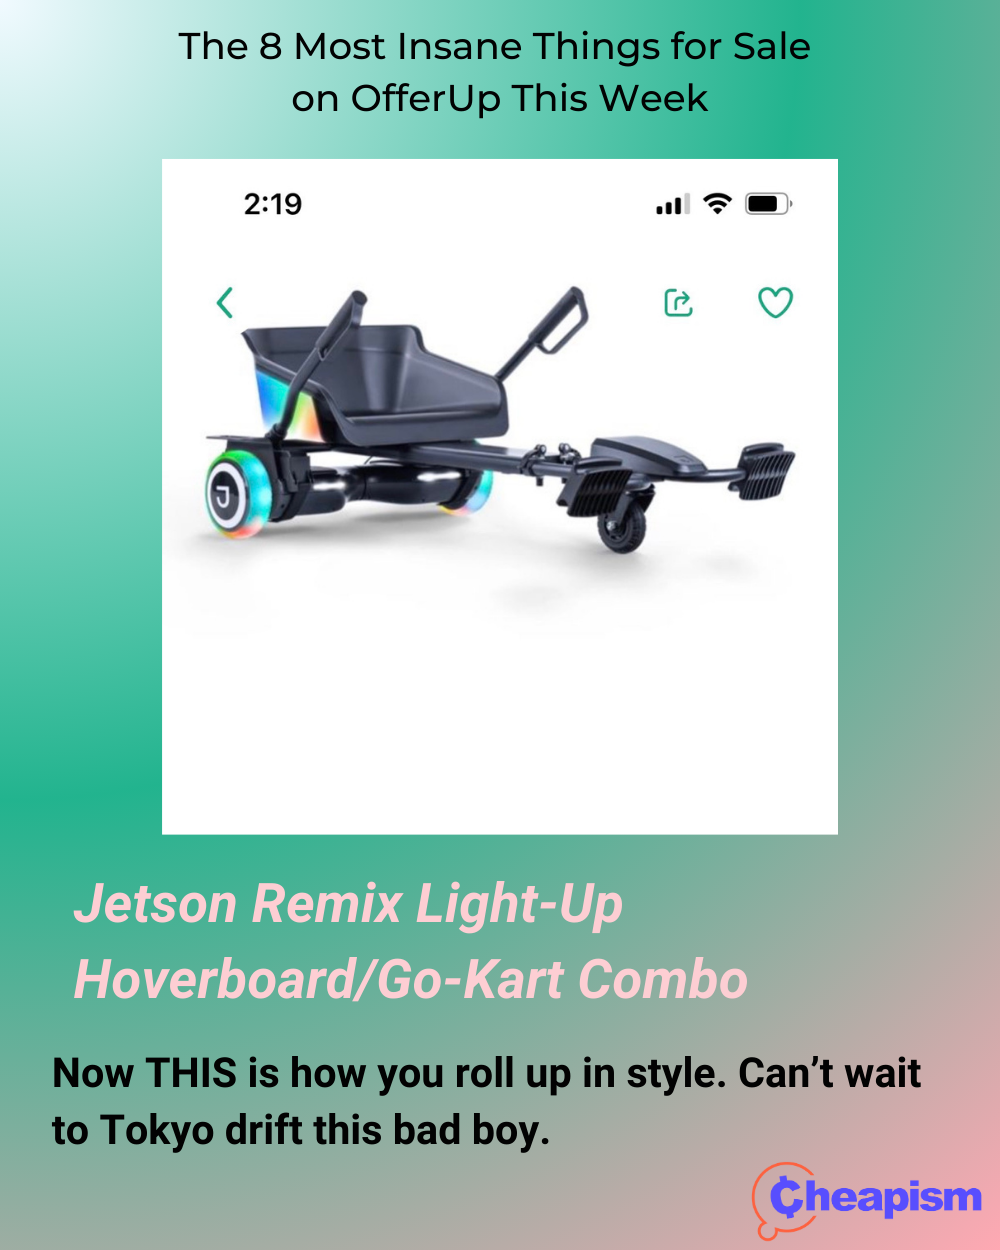 Jetson Remix Light-Up Hoverboard/Go-Kart Combo